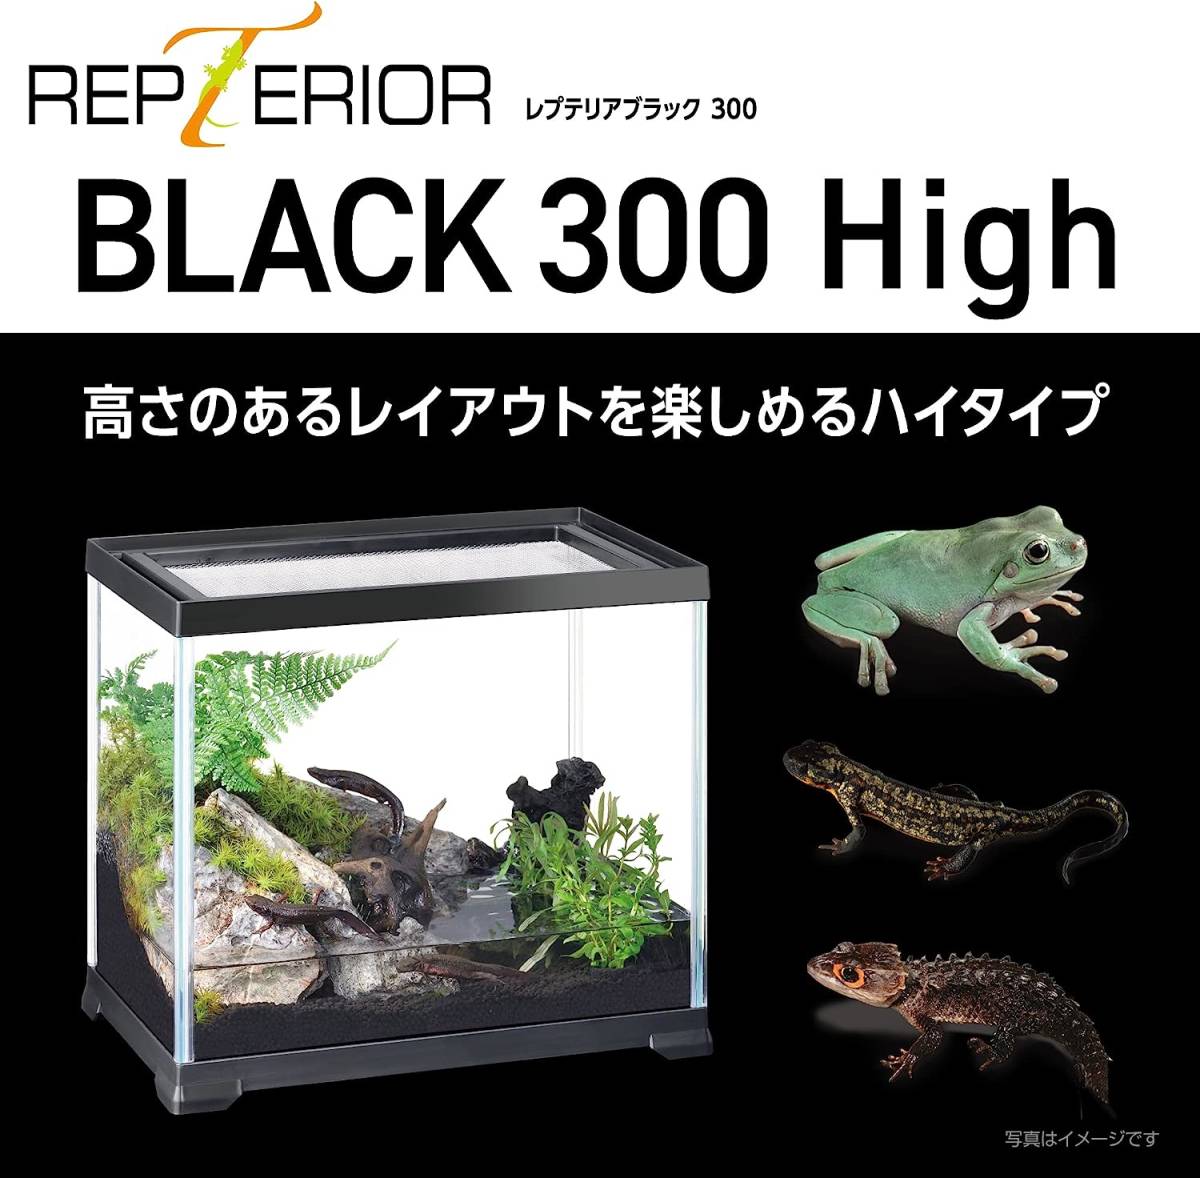 GEXjek attrition p terrier black 300 high (high) black frame reptiles * amphibia breeding cage 